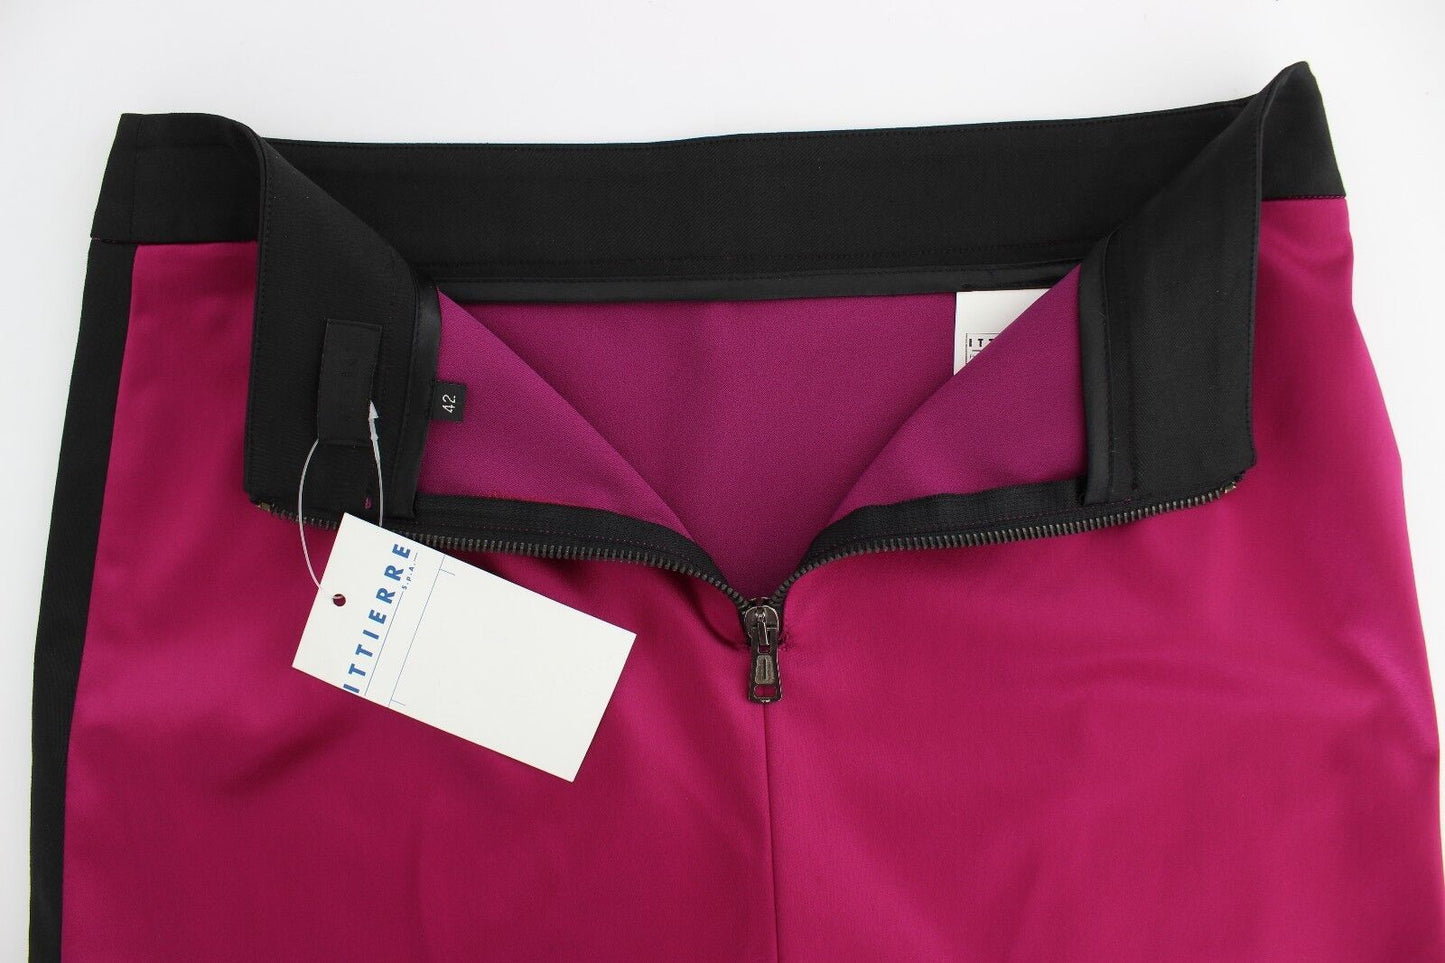 Dolce & Gabbana Elegant Pencil Skirt in Black and Pink